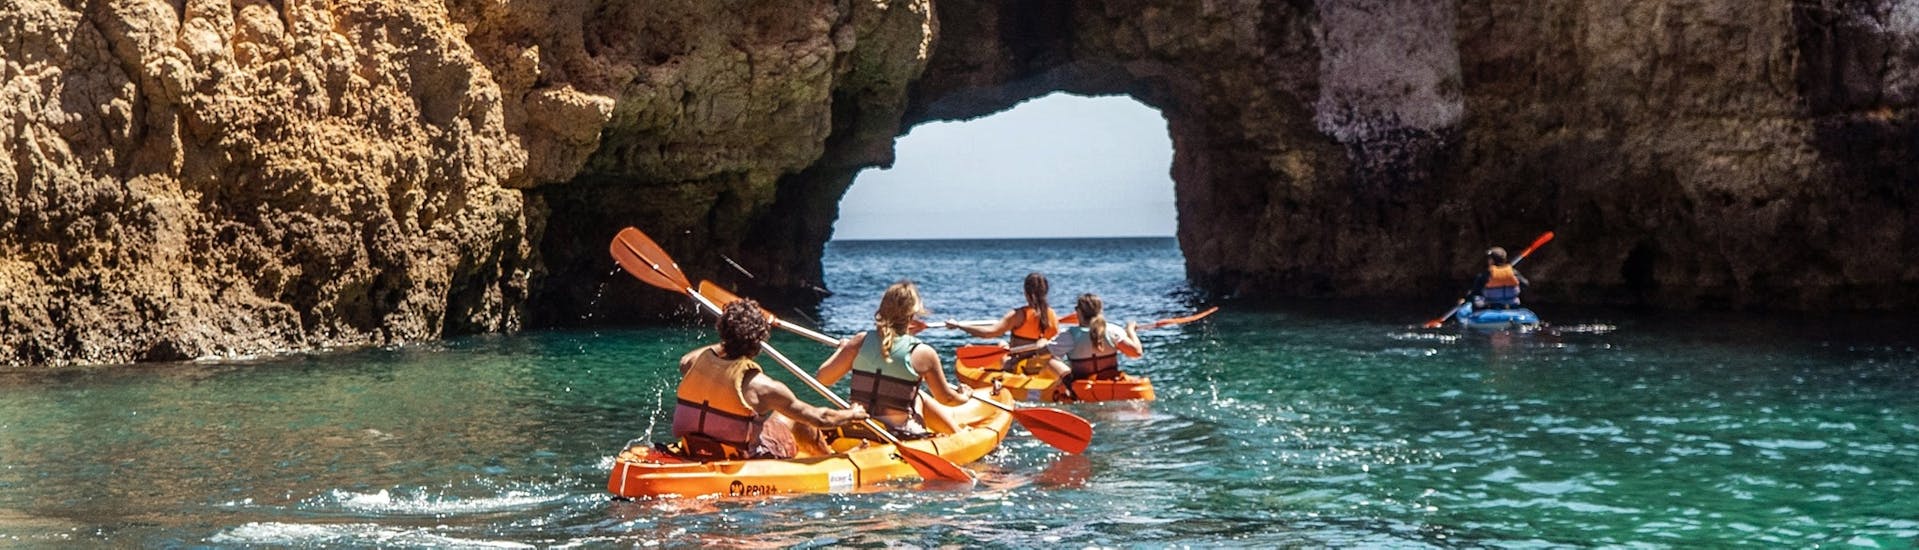 Un grupo de amigos remando durante una excursión en kayak de mar a las Grutas de Ponta da Piedade con Discover Tours Lagos.